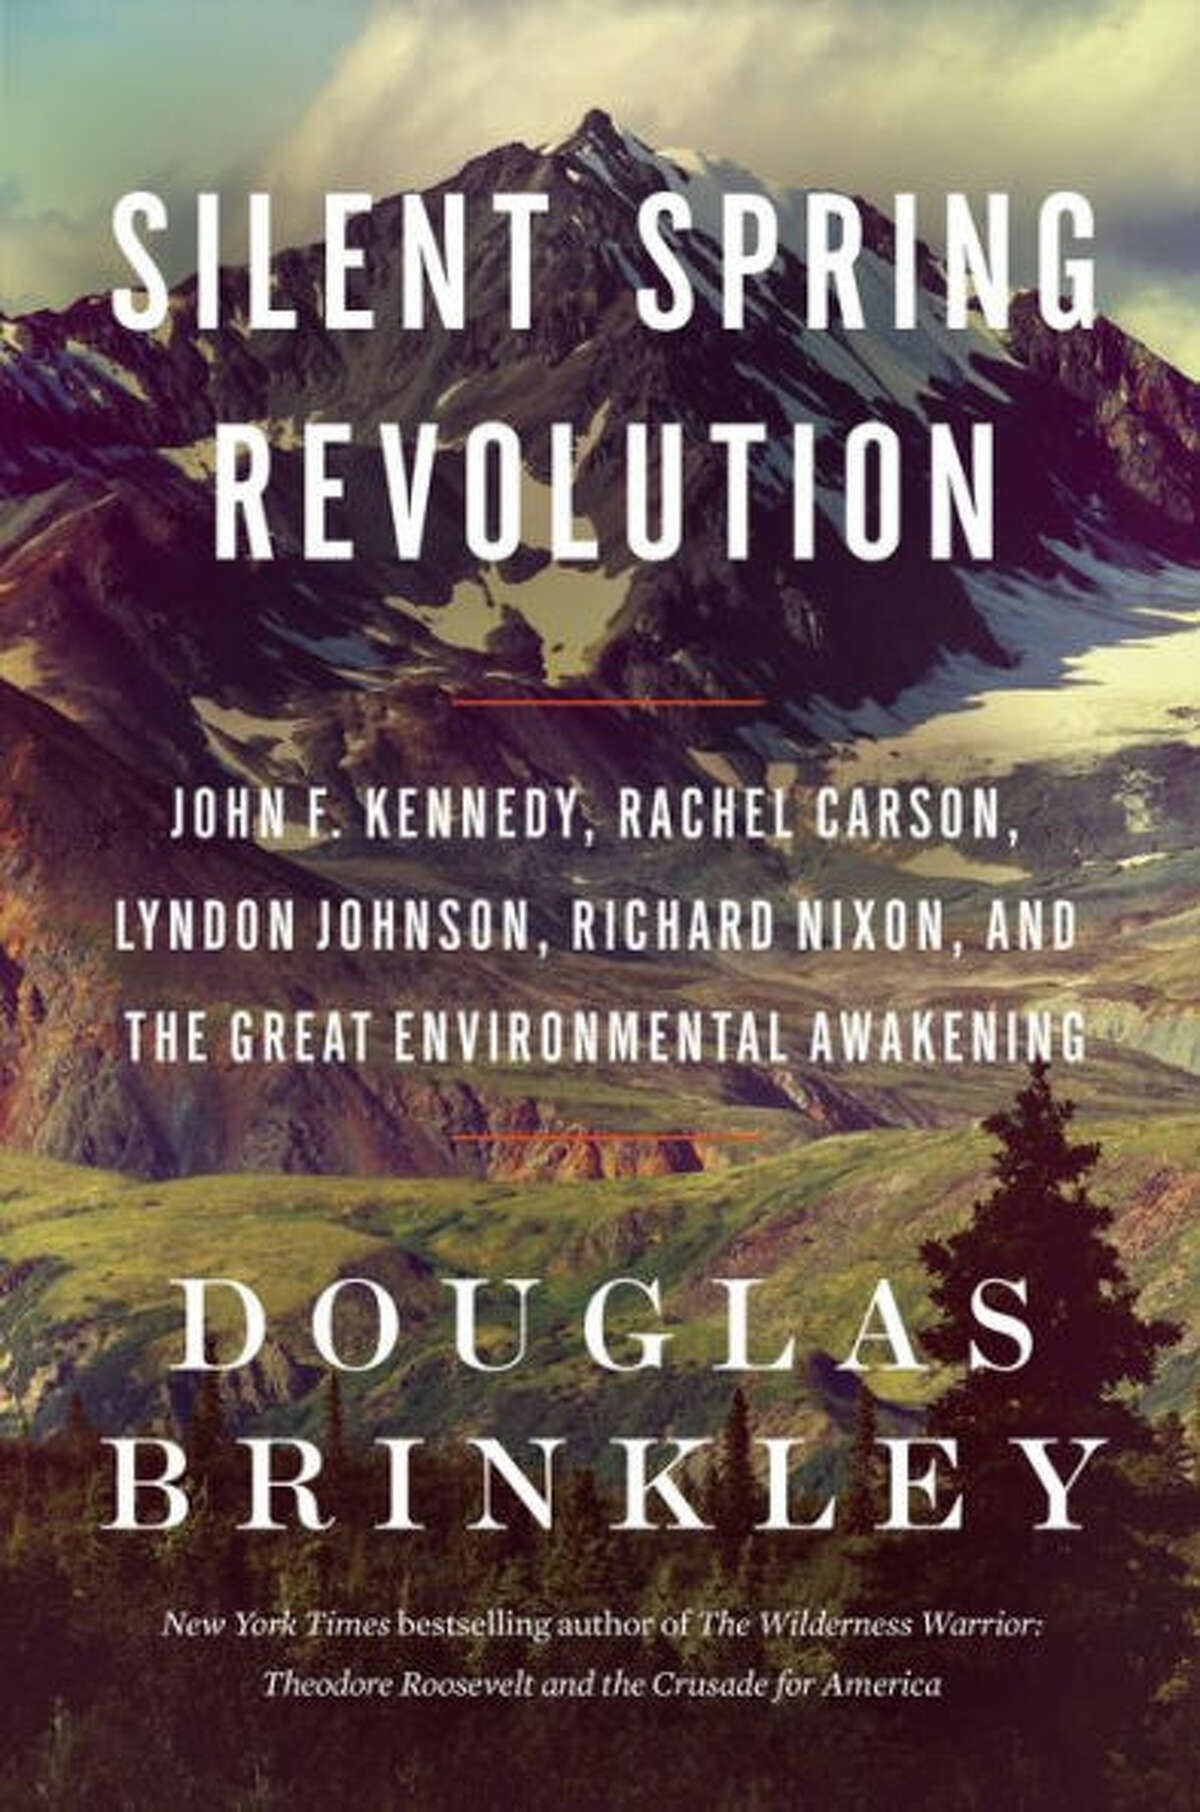 "Silent Spring Revolution" by Douglas Brinkley